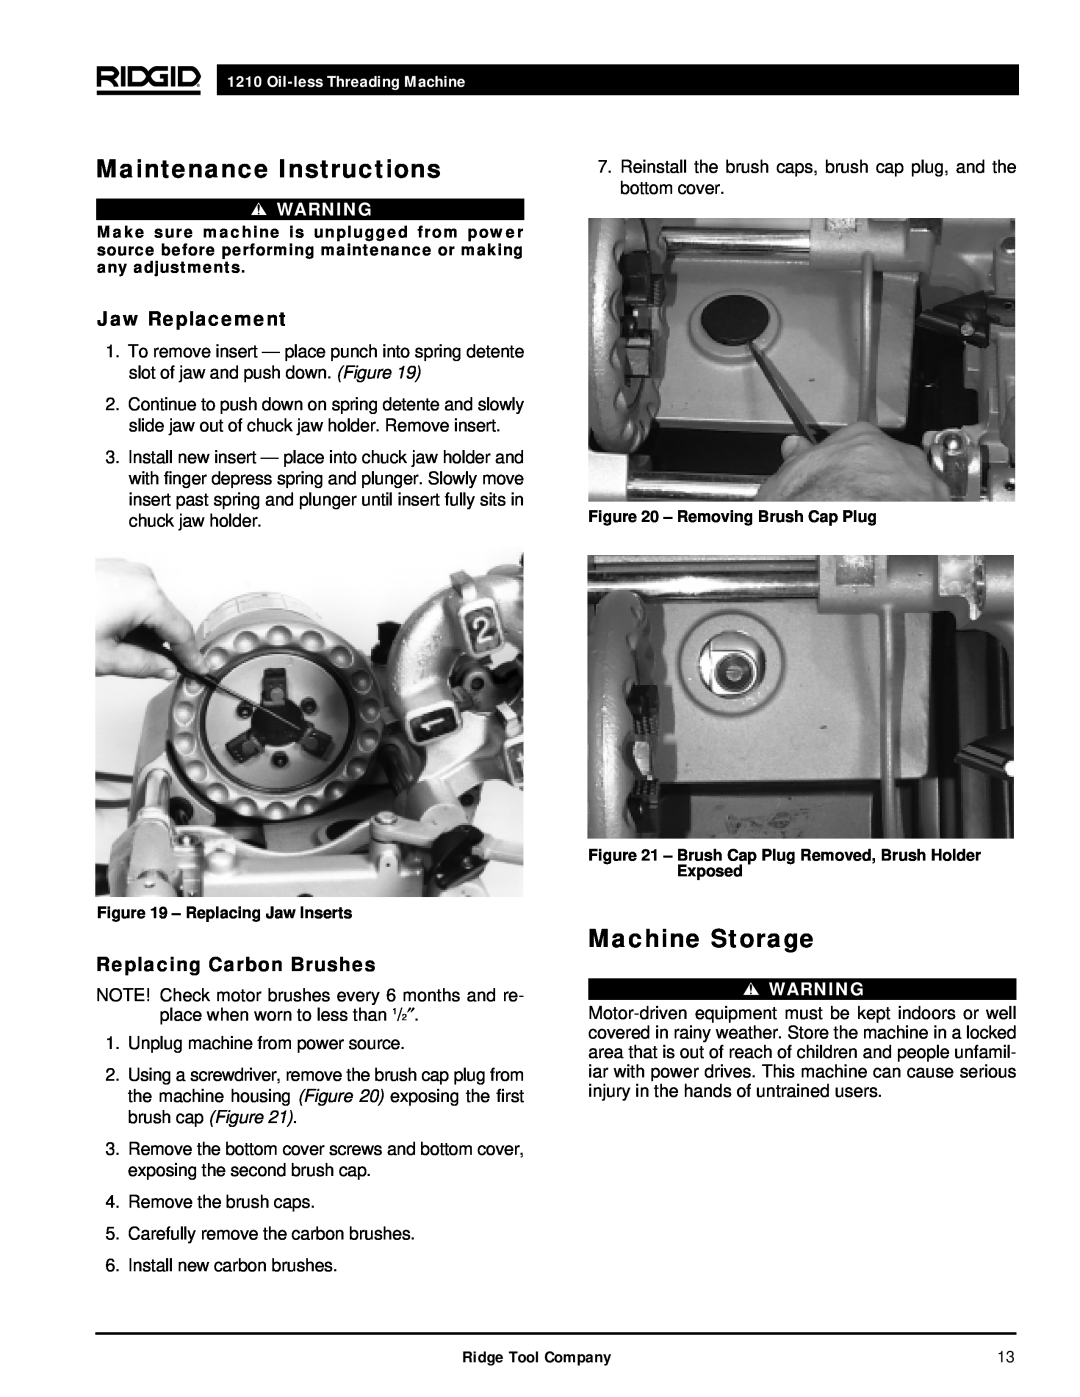 RIDGID 1210 manual Maintenance Instructions, Machine Storage, Jaw Replacement, Replacing Carbon Brushes 